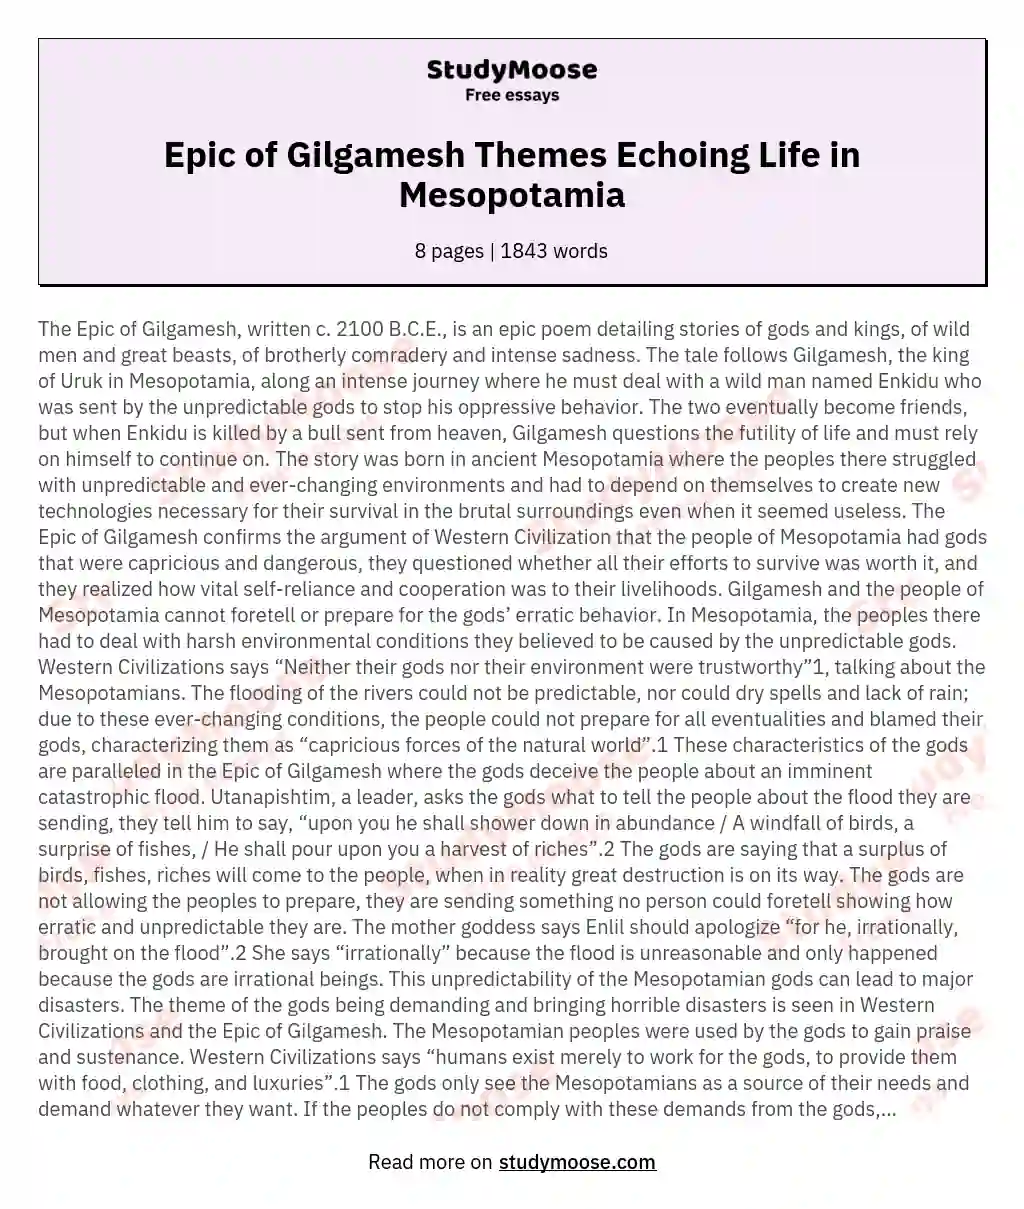 Epic of Gilgamesh Themes Echoing Life in Mesopotamia essay